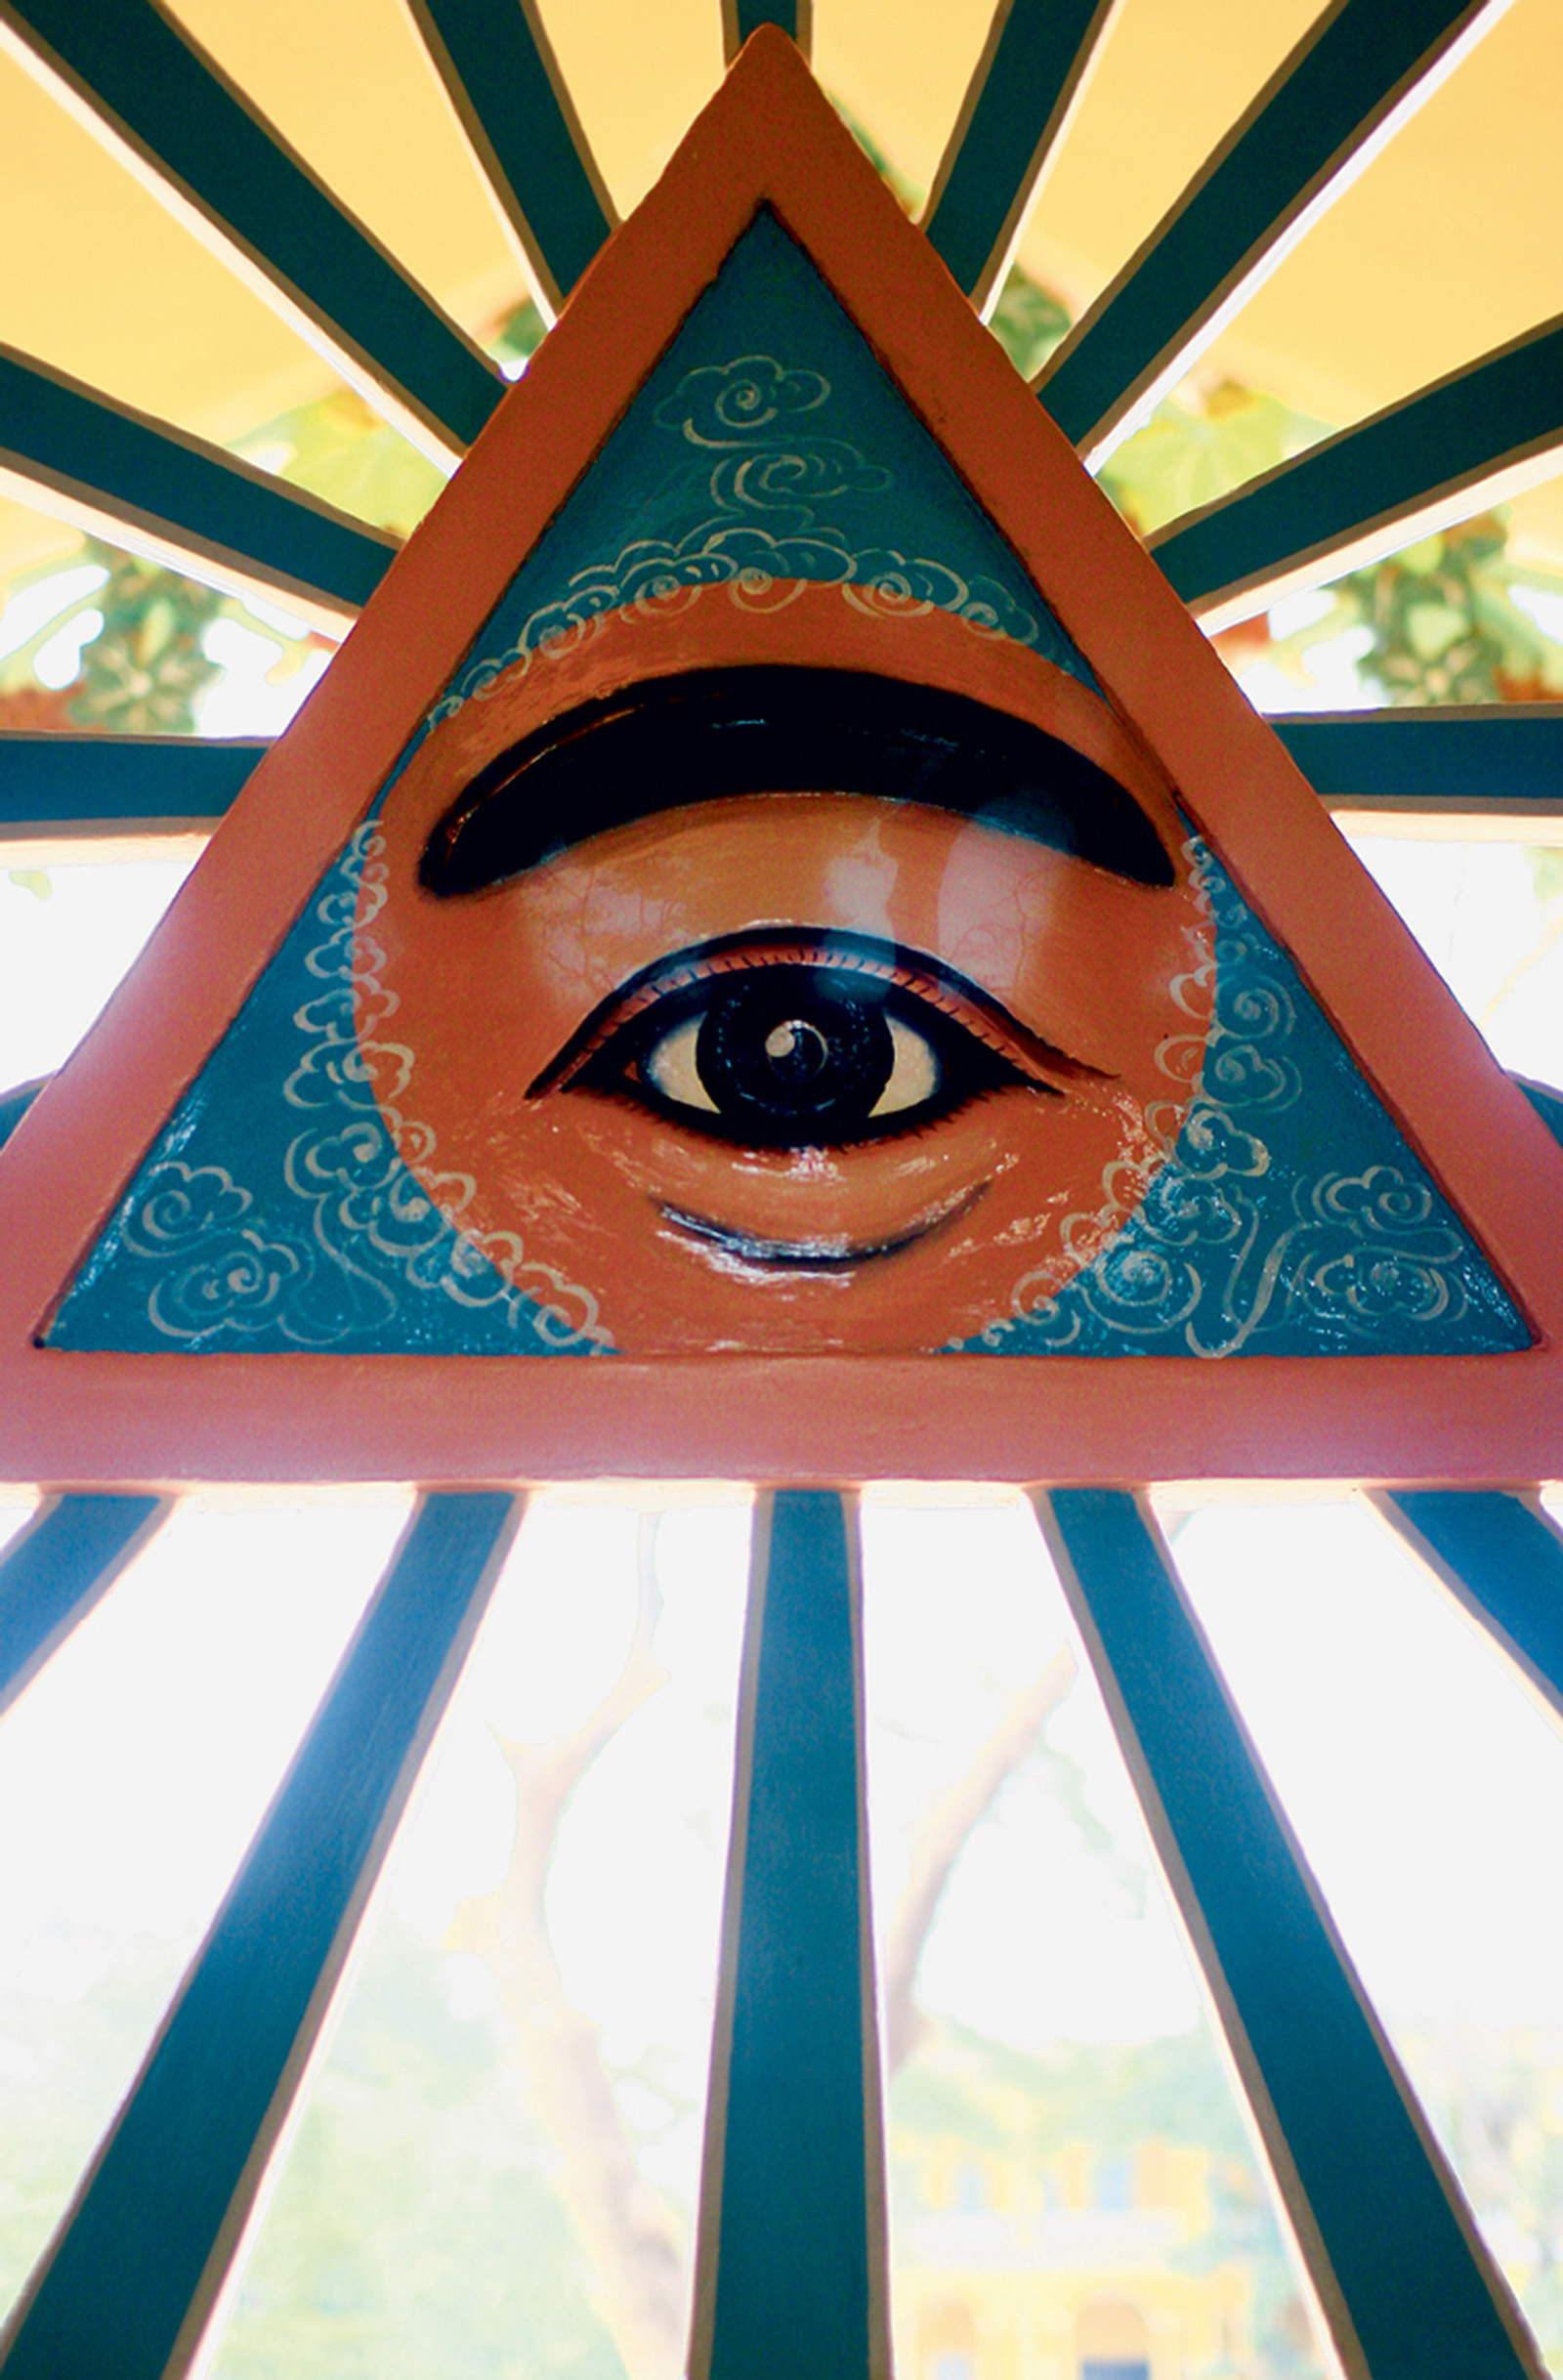 A painting at the Cao Dai Holy See at Tay Ninh, Vietnam, of God’s left eye.